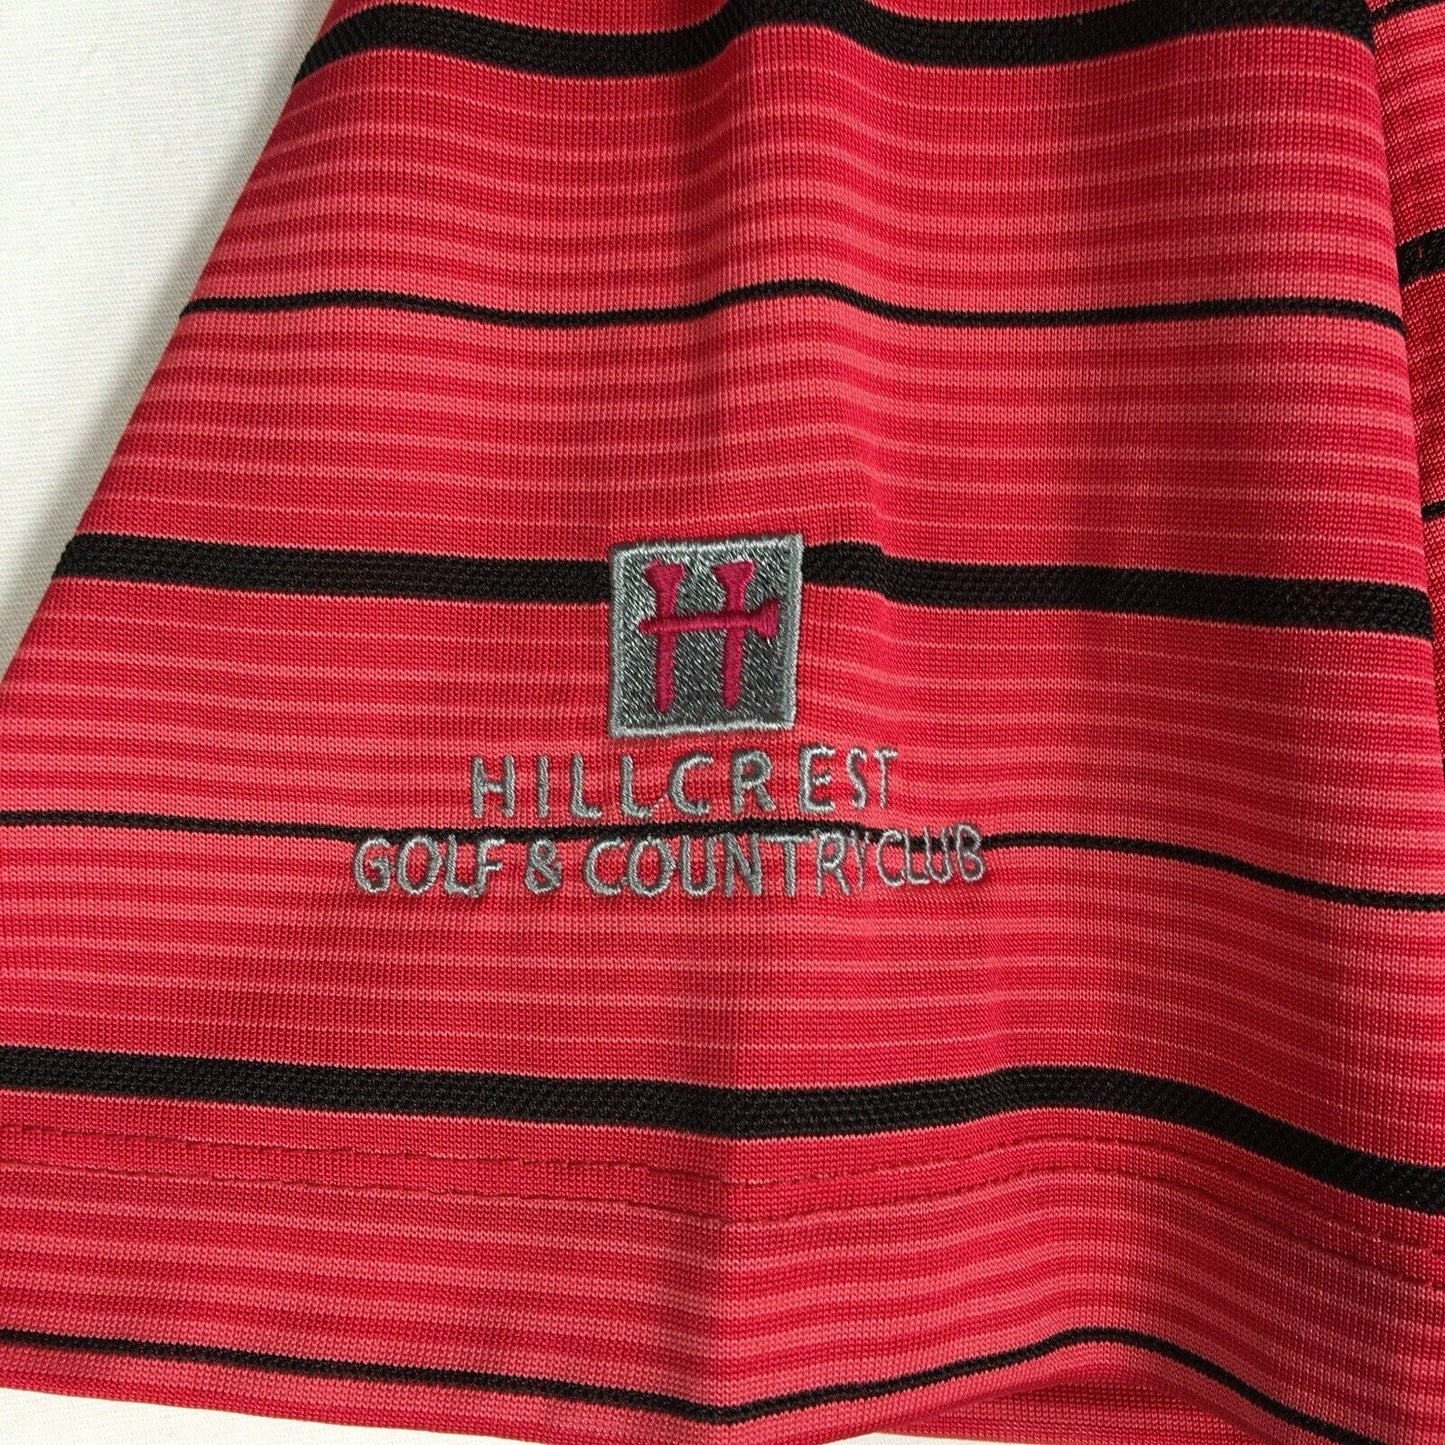 Nike Mens Size Medium Red Black Golf Shirt Dri-Fit Tour Performance Short Sleeve Polo